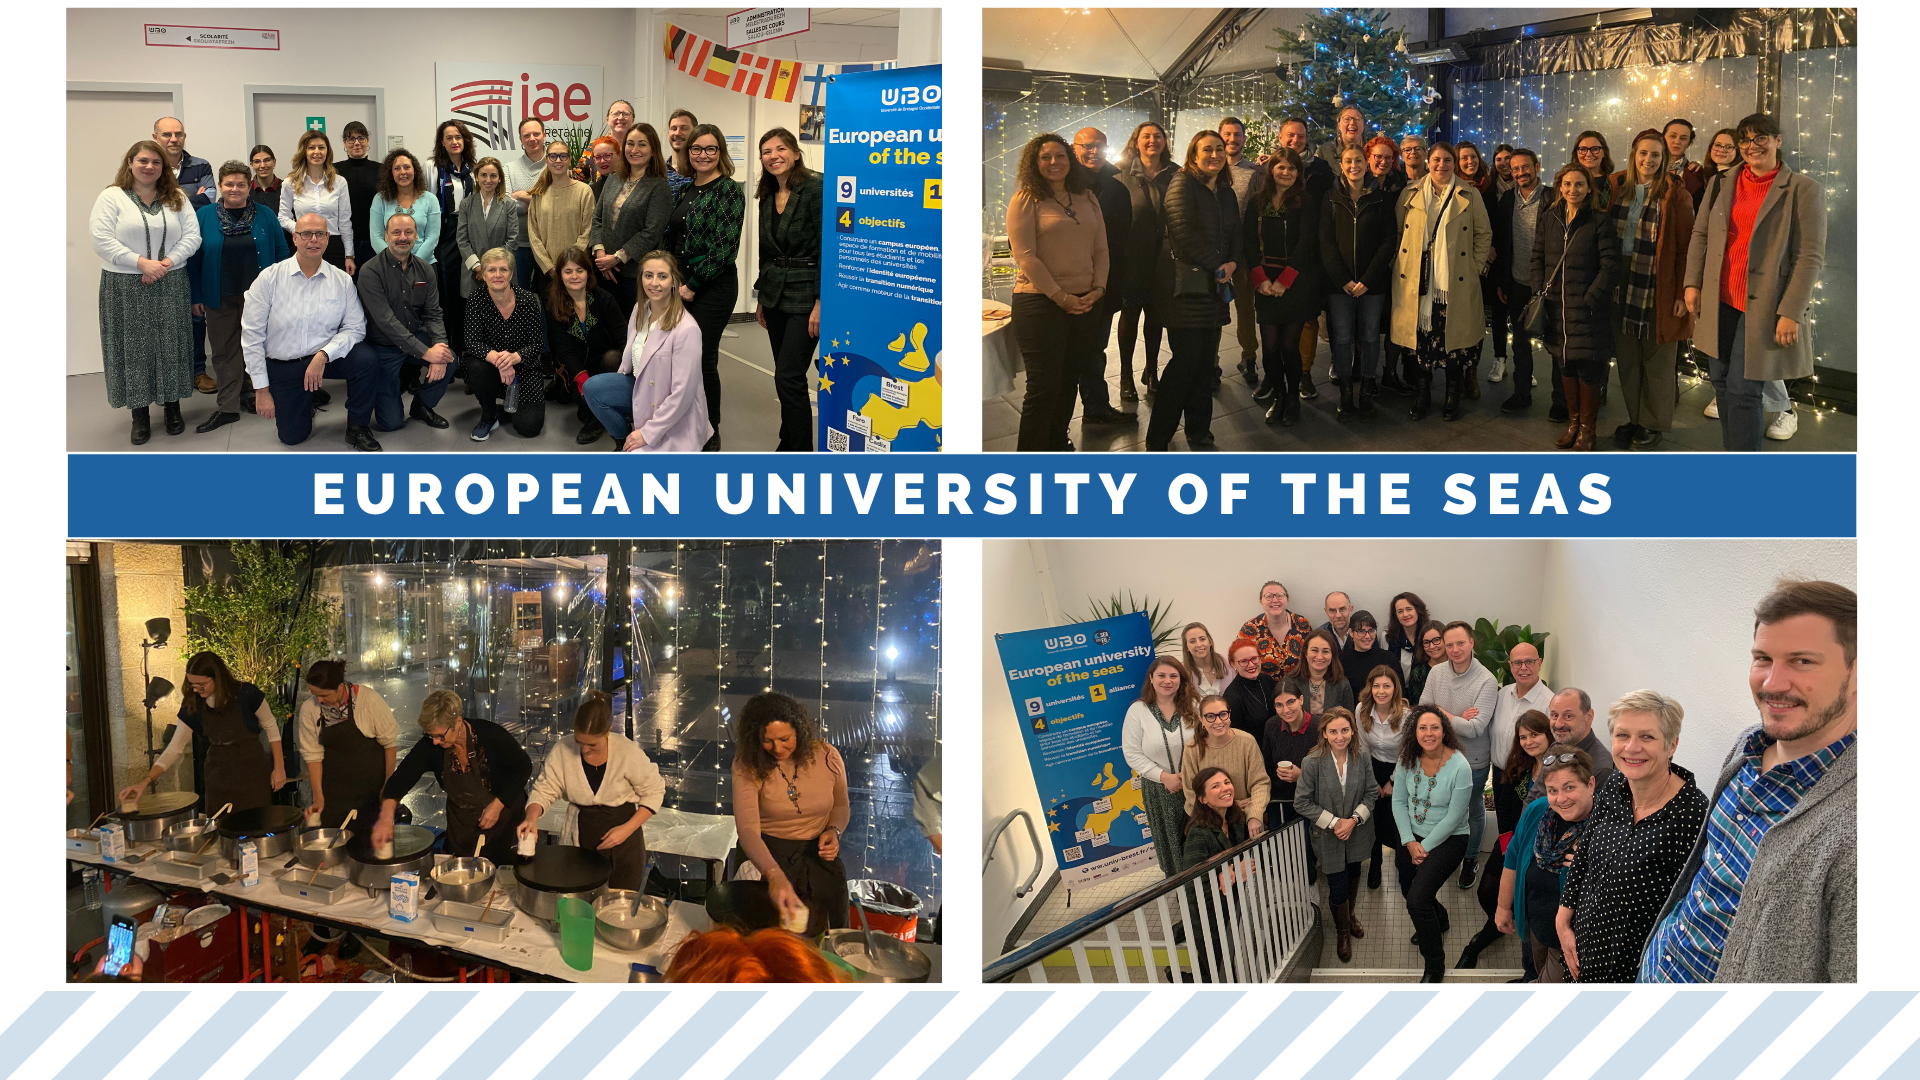 European university of the seas